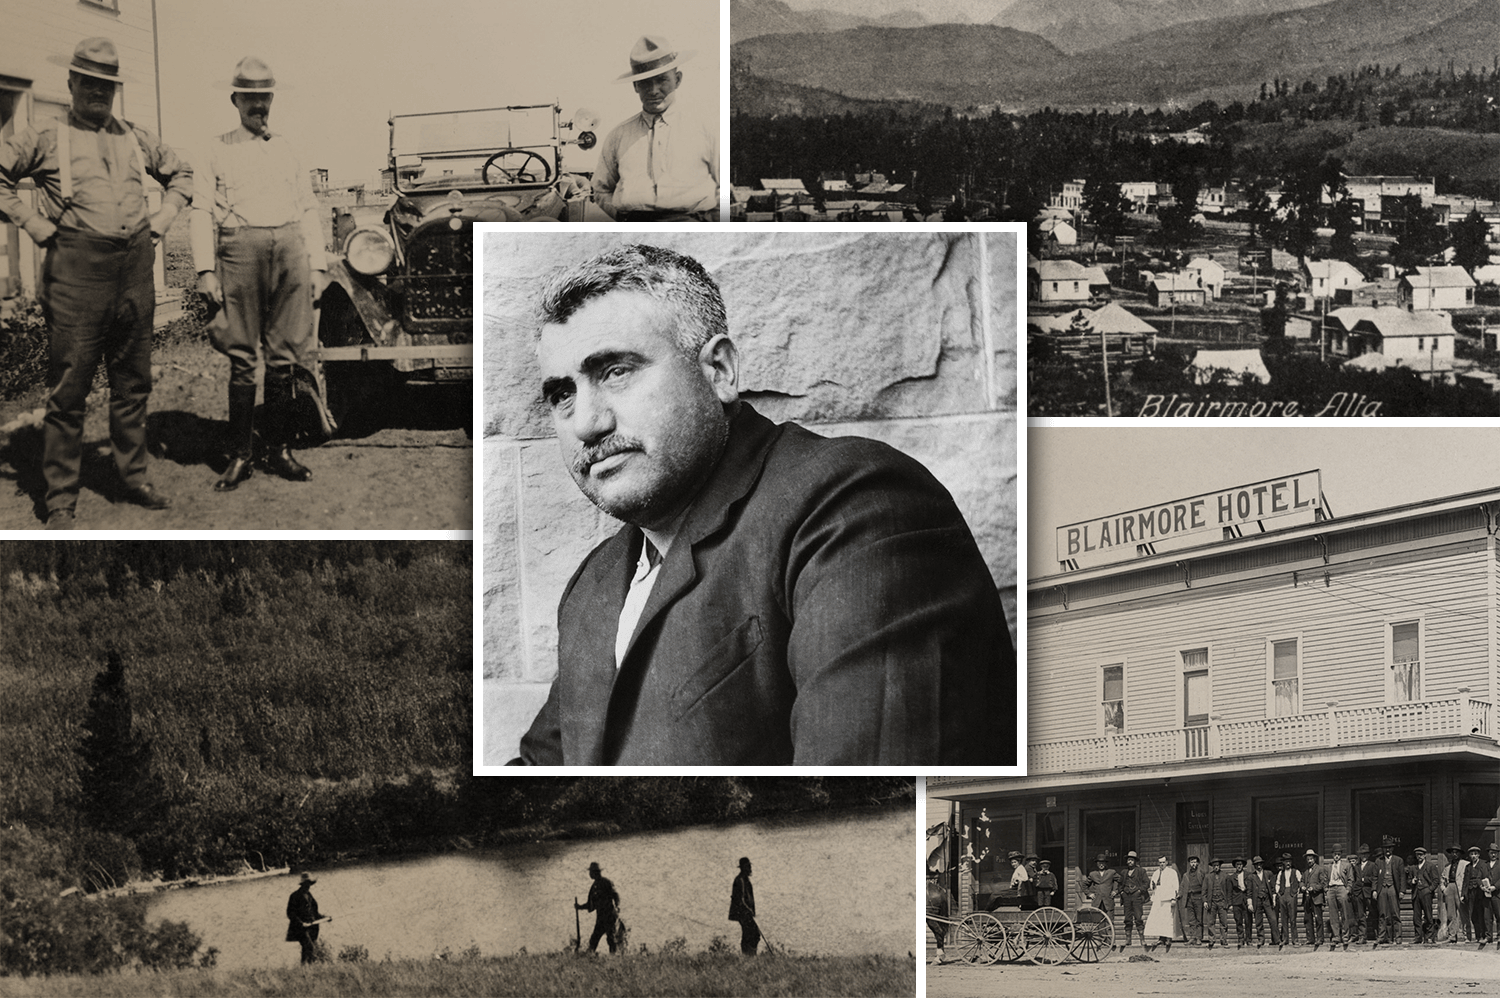 Collage of archival photos featuring Emilio Picariello.